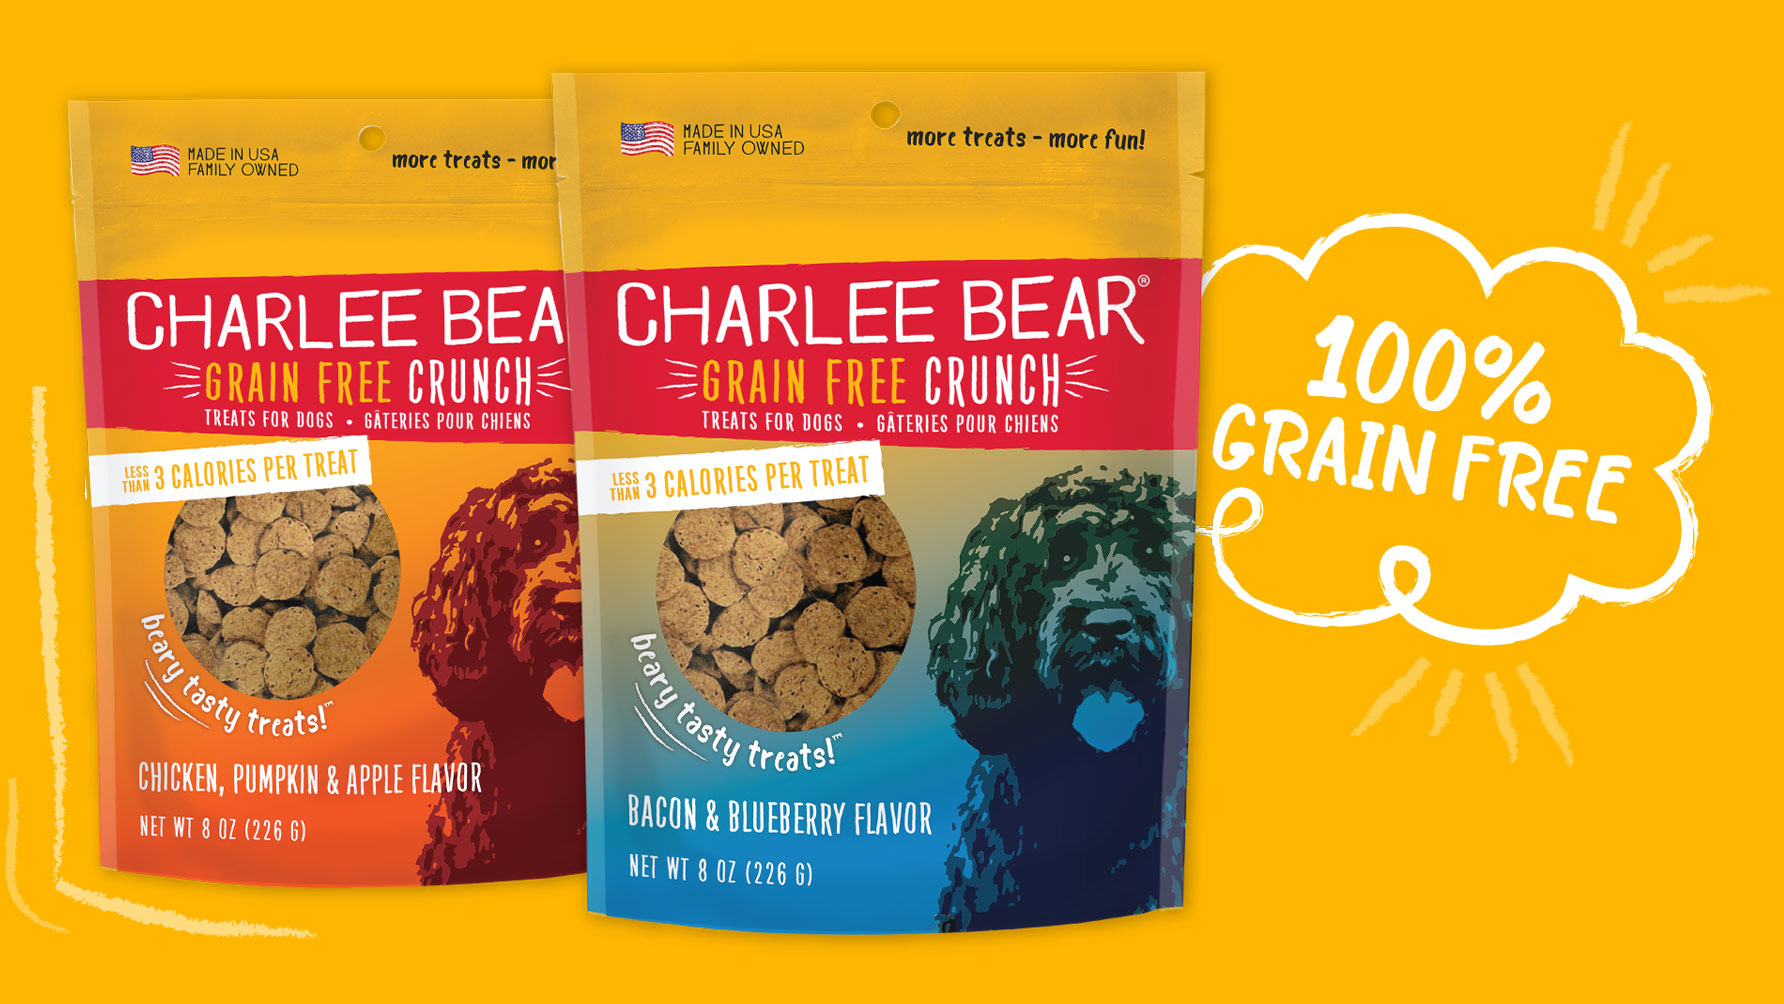 Grain Free treats by Charlee Bear